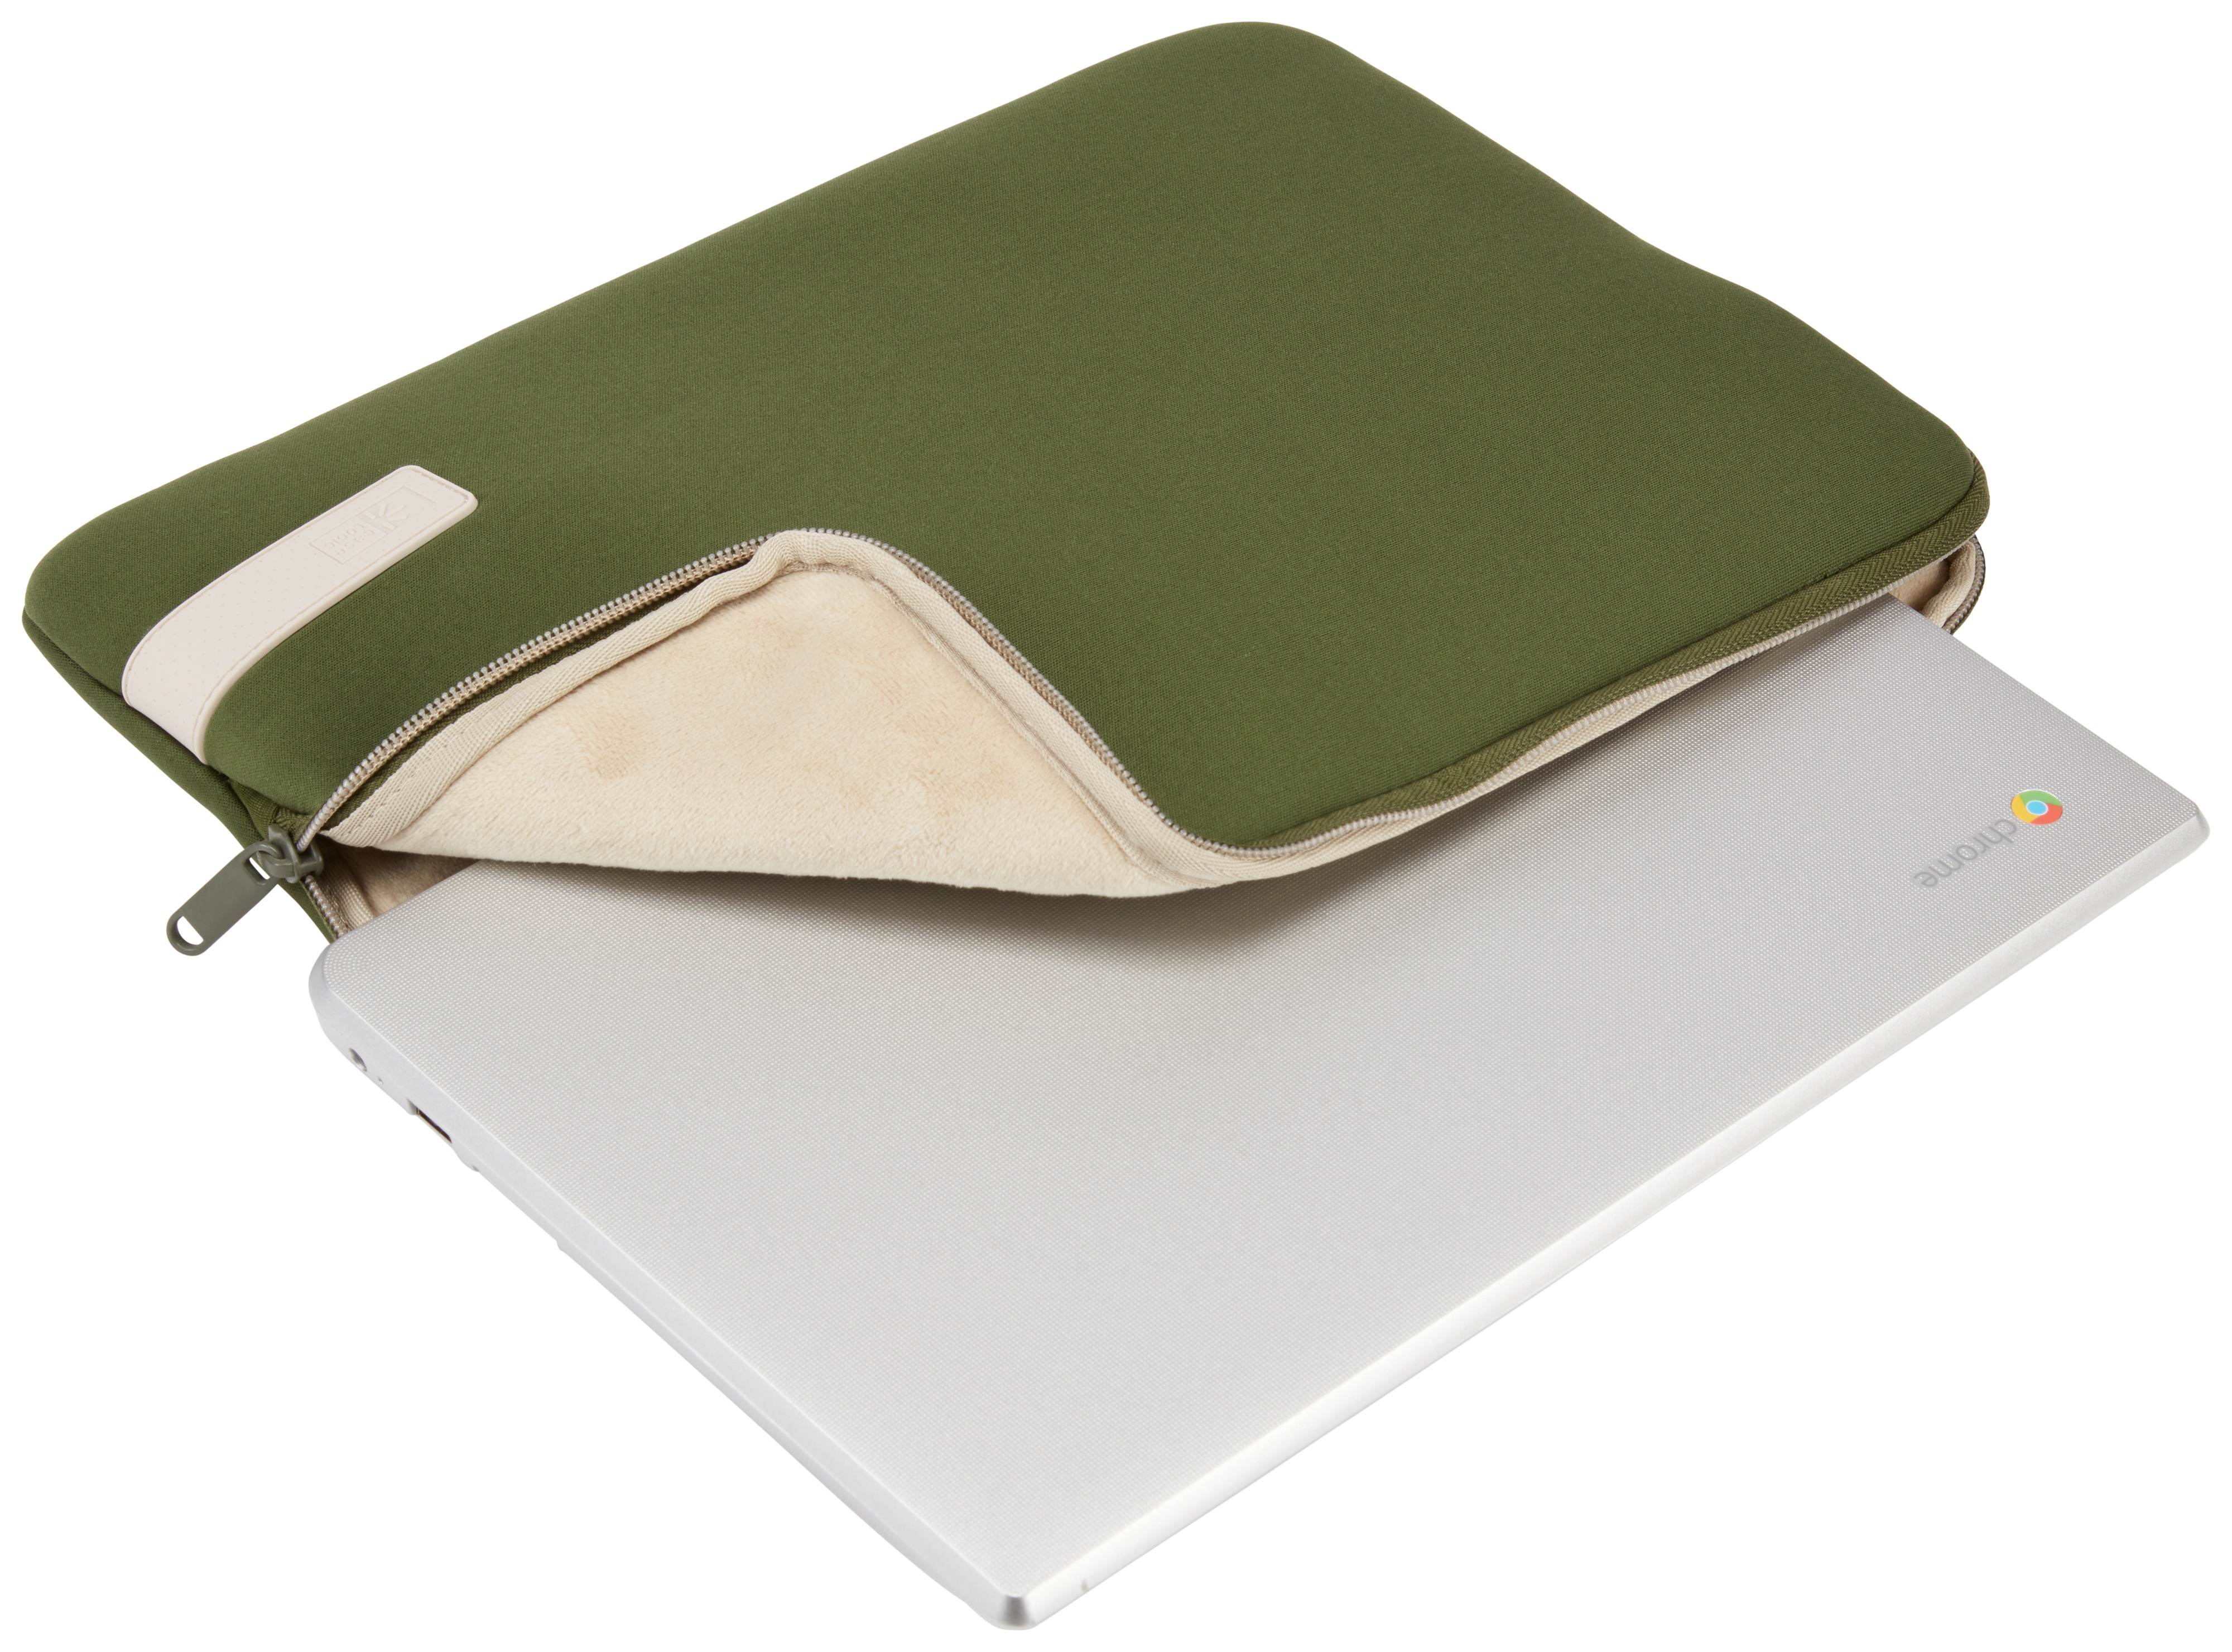 CASE LOGIC Reflect Notebooksleeve Sleeve für Polyester, Grün Universal